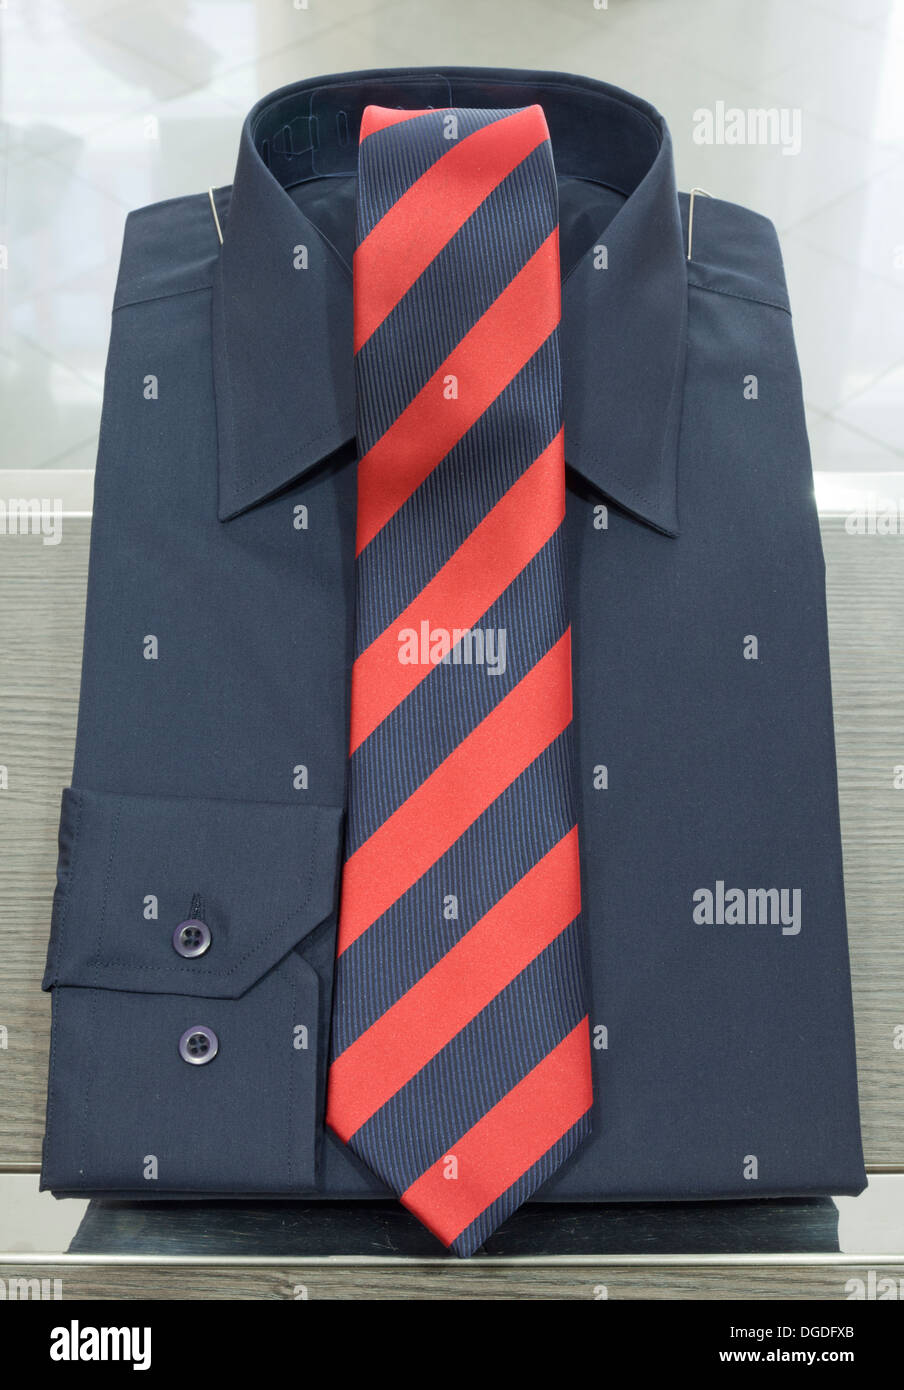 men's shirt with ties on desk Stock Photo